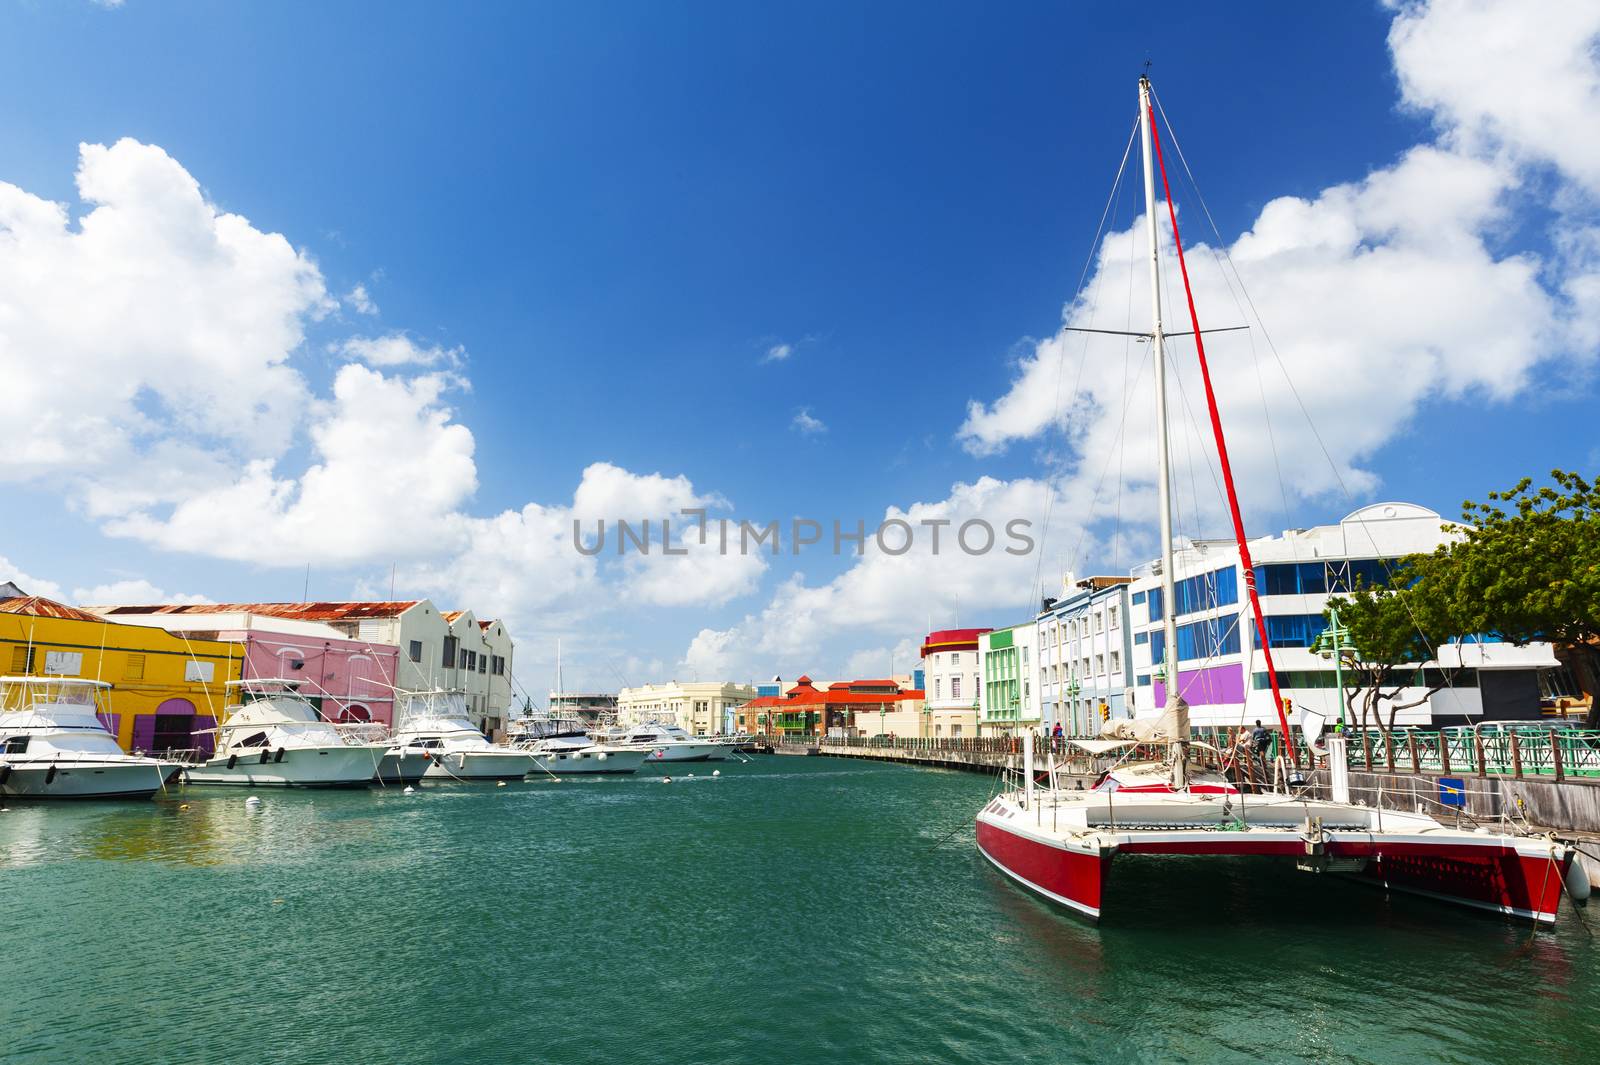 Bridgetown sea canal in Barbados by fyletto